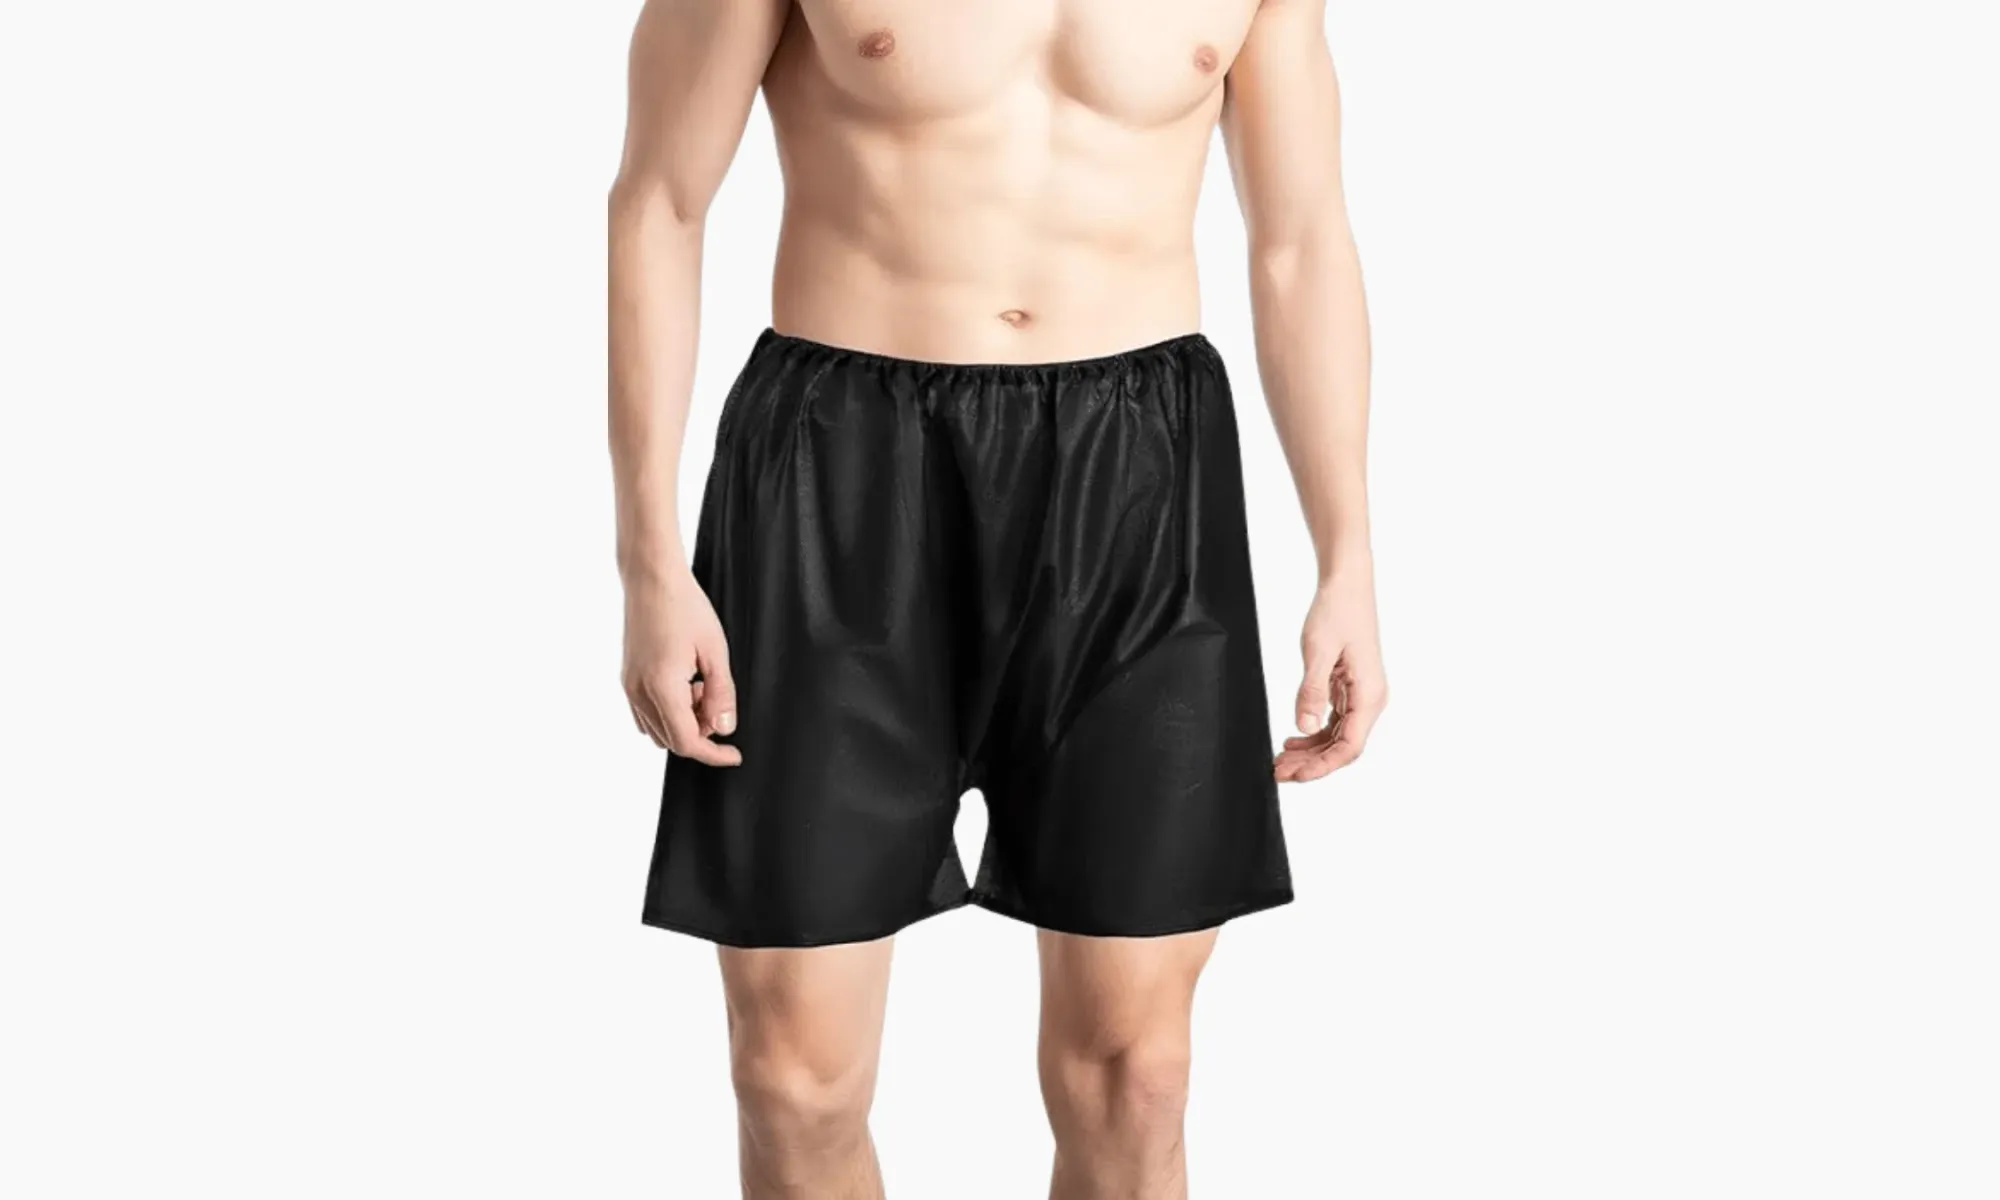 Noverlife Disposable Underwear for Travel for Men